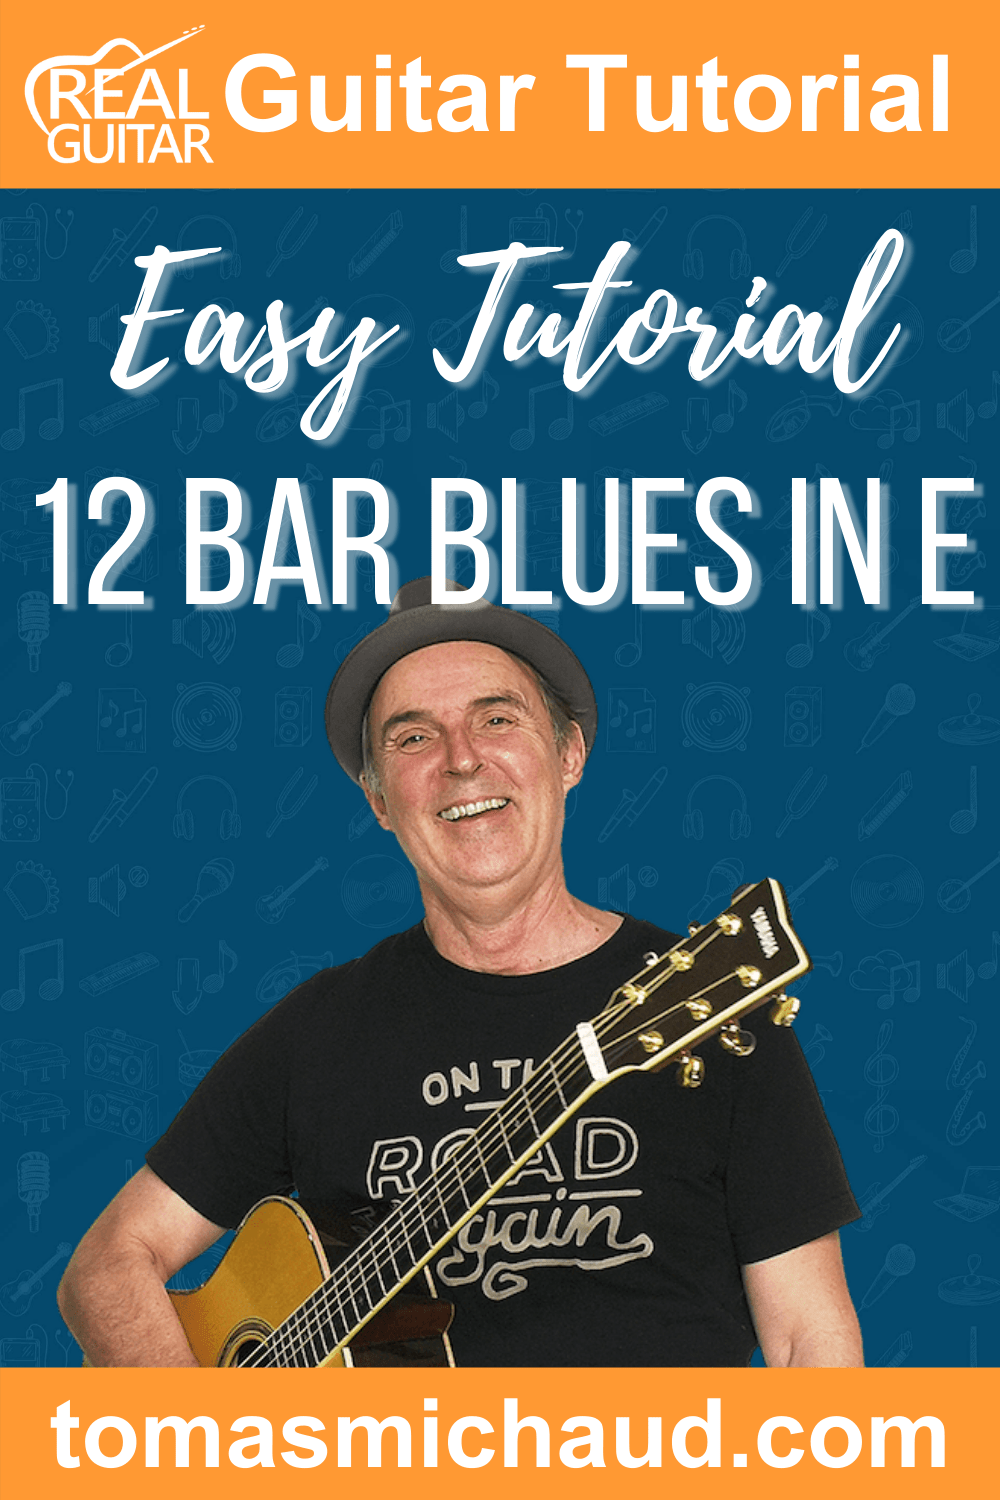 Easy Tutorial 12 Bar Blues in E